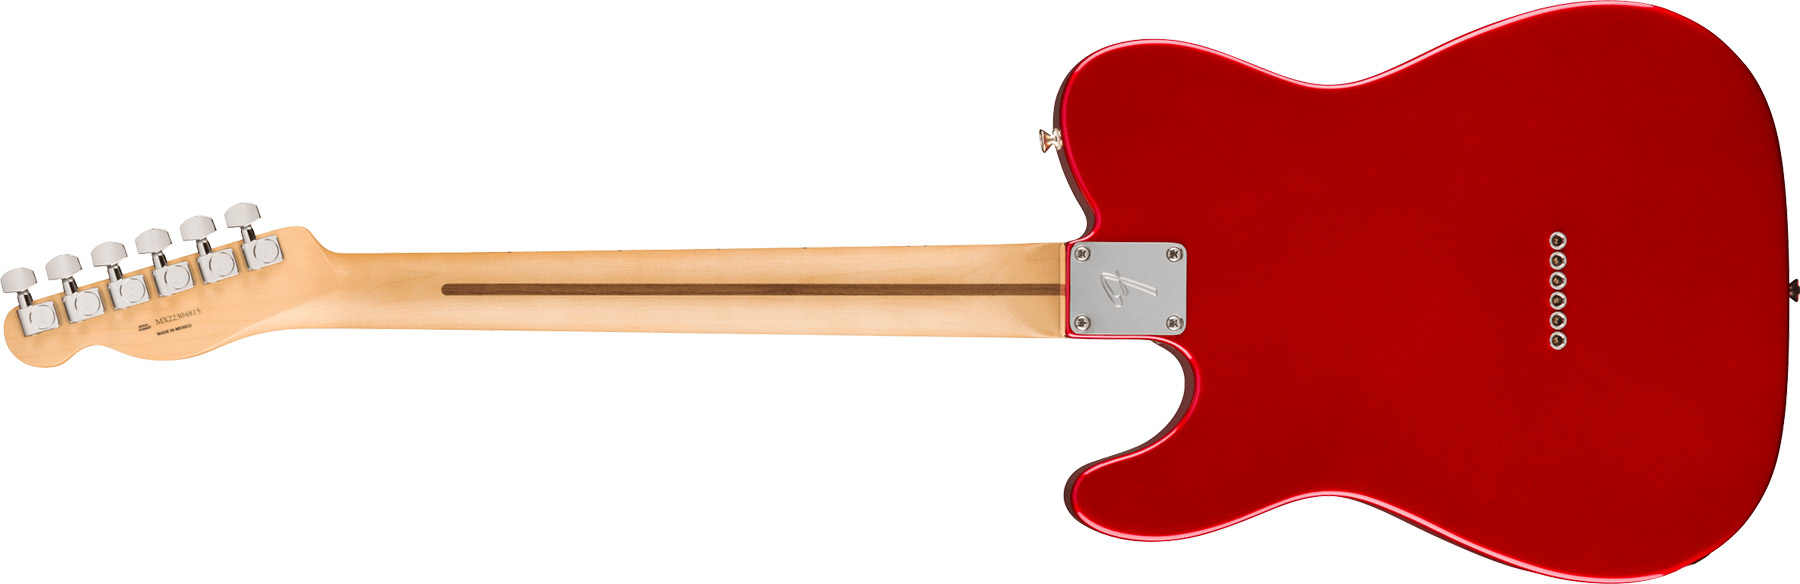 Fender Tele Player Mex 2023 2s Ht Mn - Candy Apple Red - Guitarra eléctrica con forma de tel - Variation 1